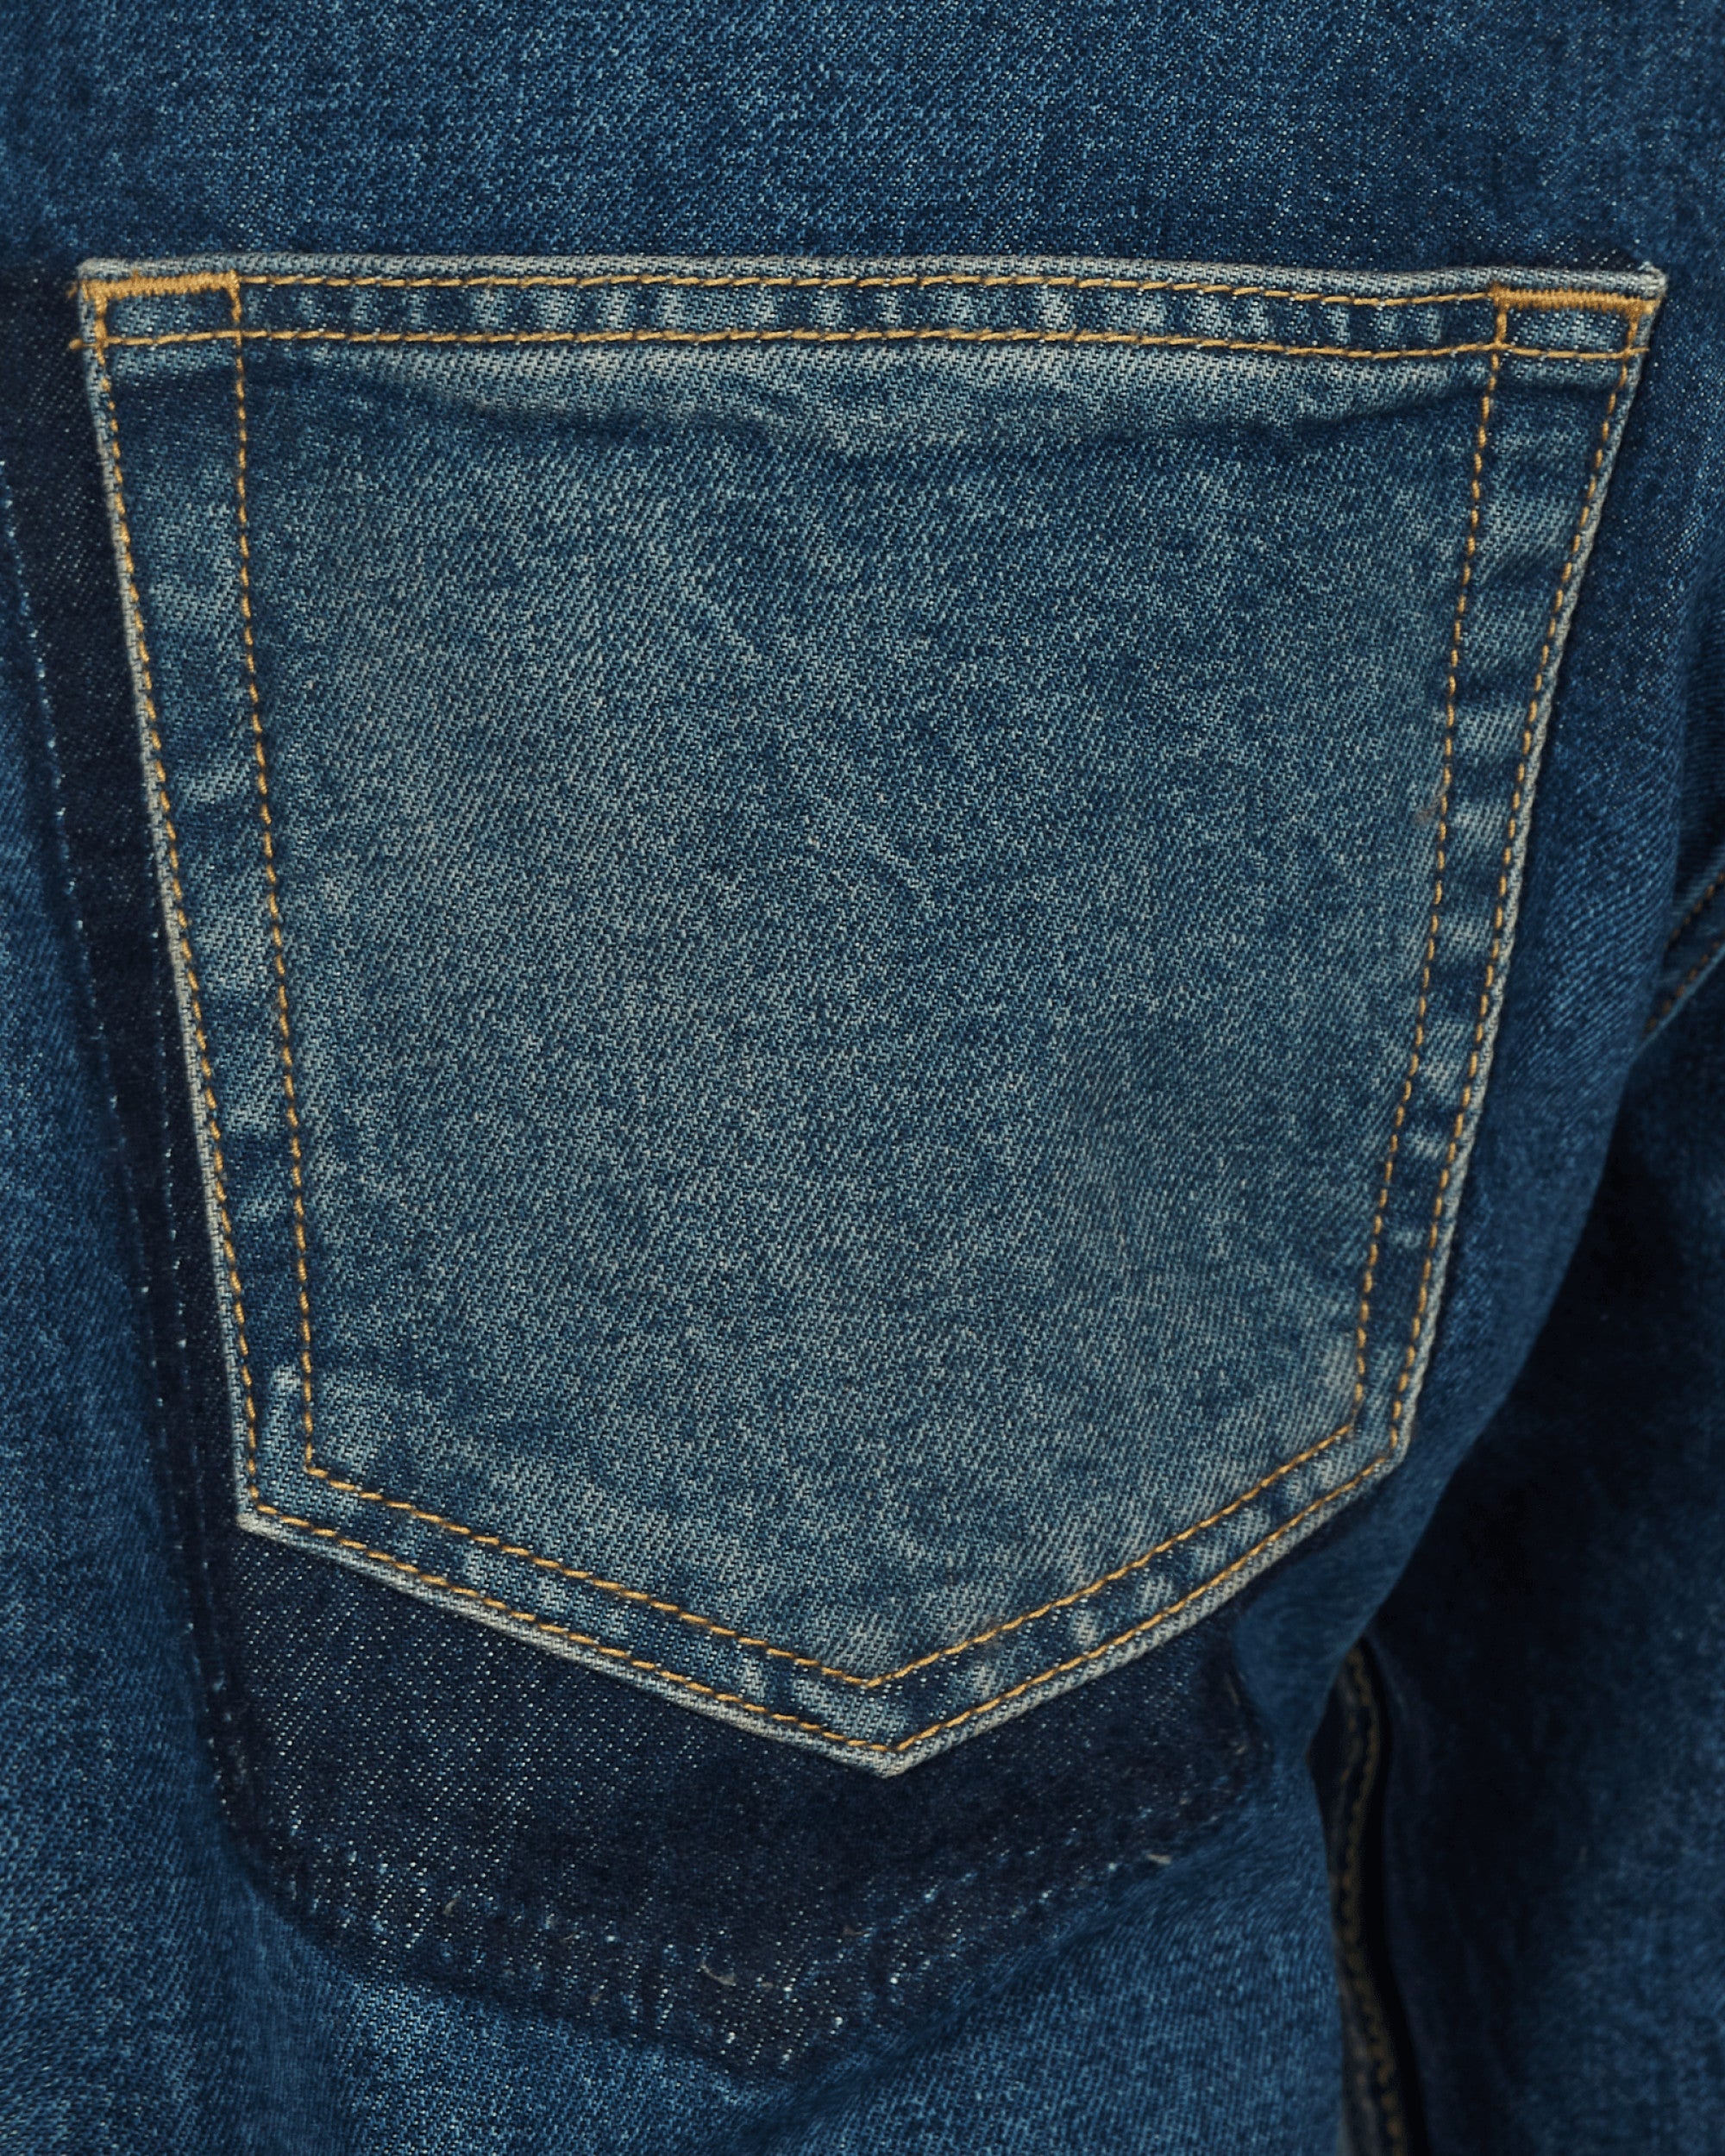 Maison Margiela Pants 5 Pockets Dirty Medium Blue Raw Indigo Pants Denim S50LA0194S30561 979